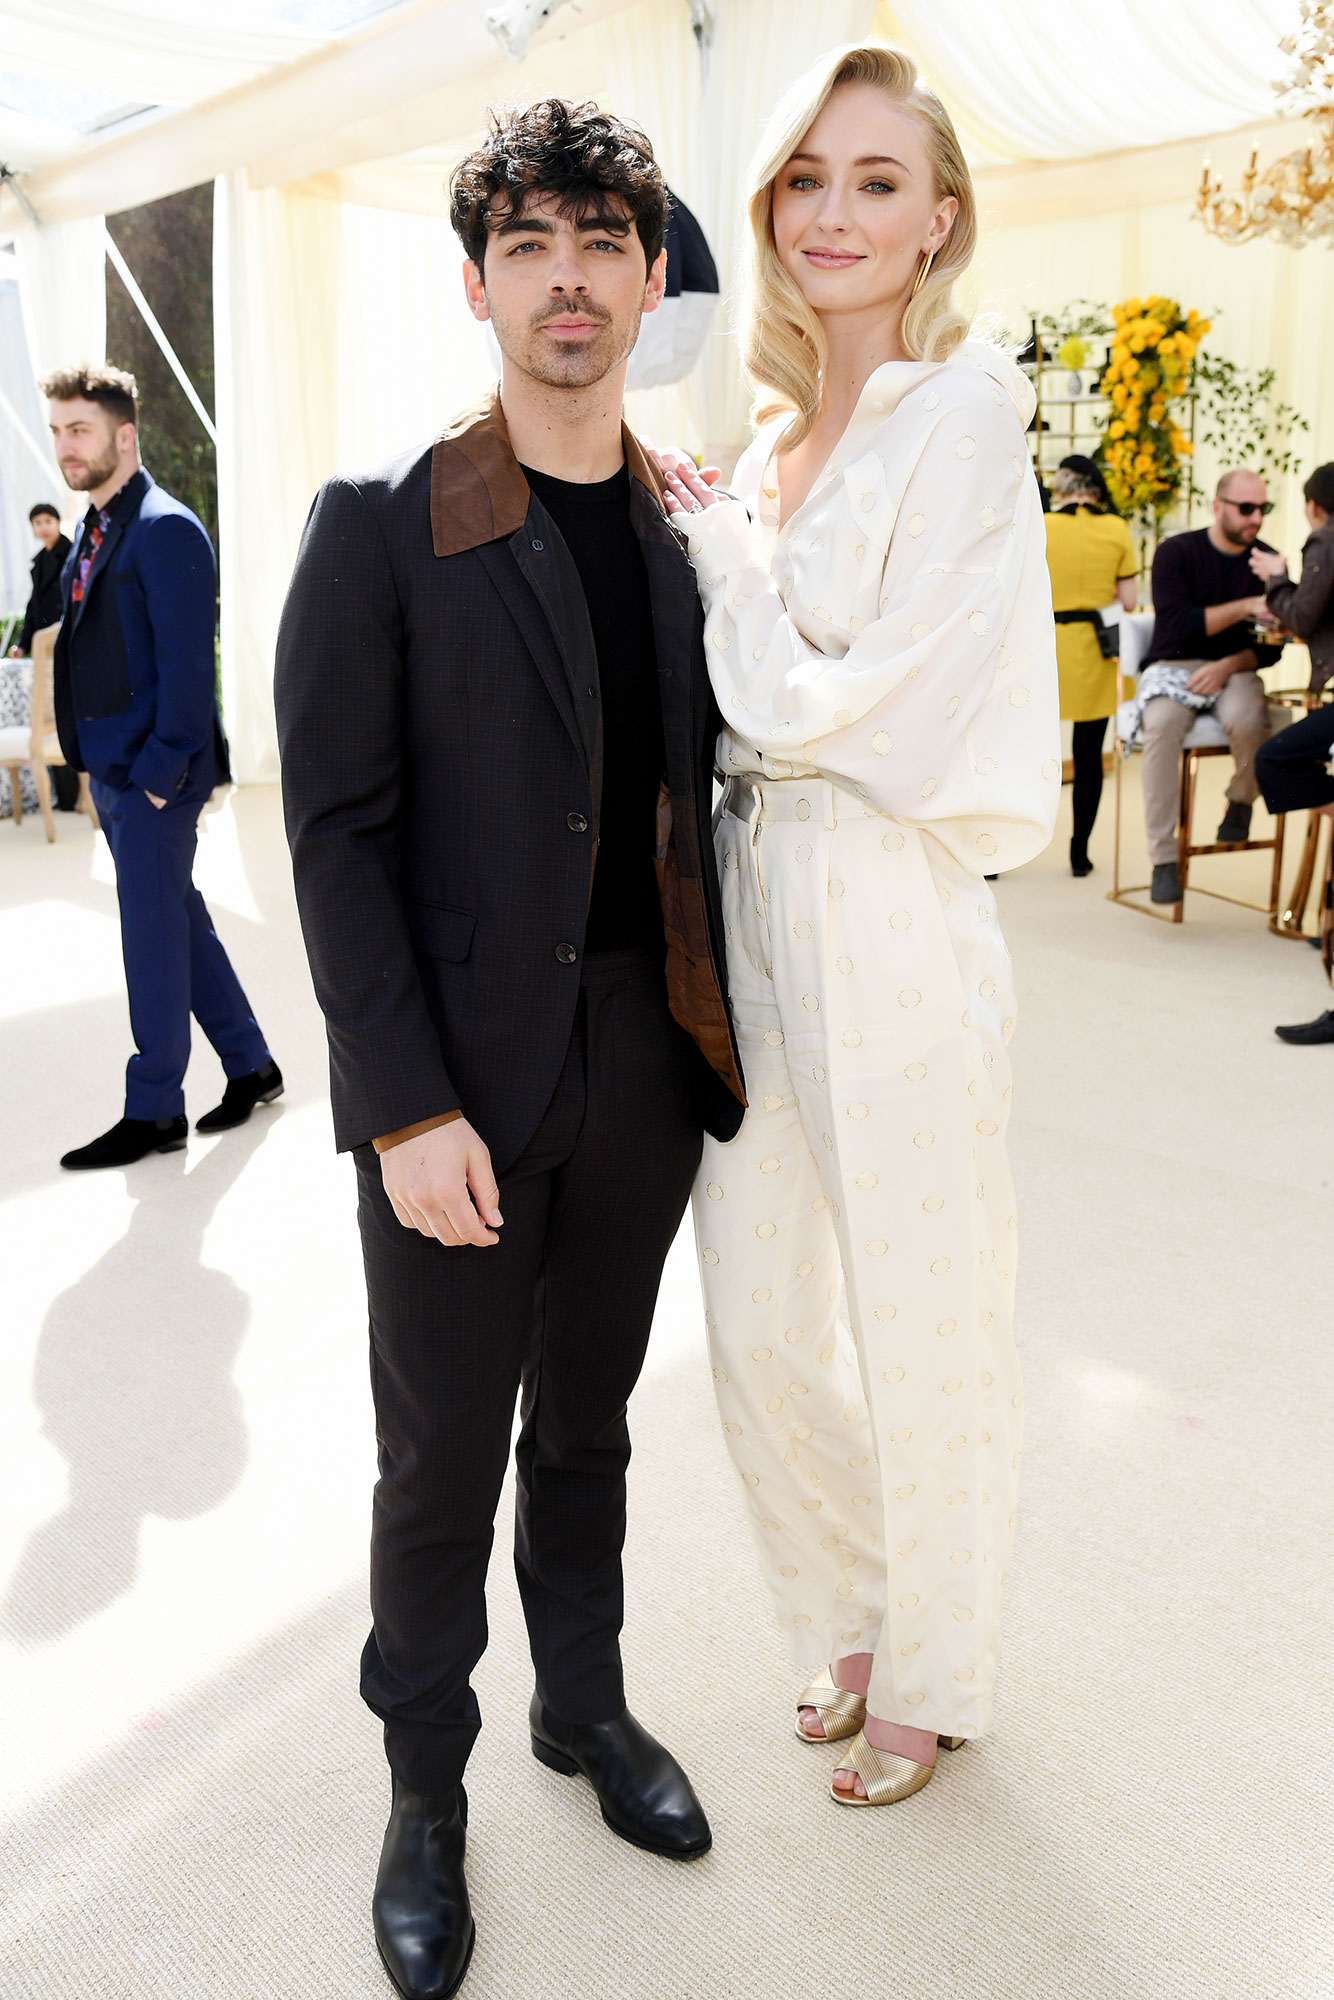 Sophie Turner and Joe Jonas wedding: Maisie Williams' boyfriend